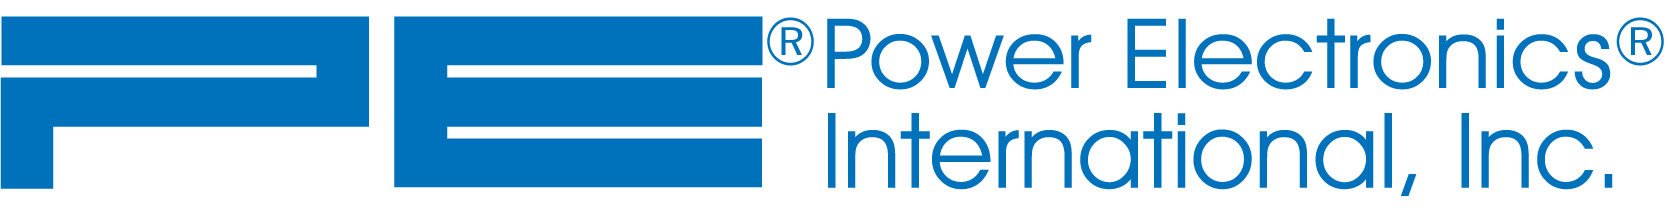 PE Power Electronics International, Inc. logo in blue